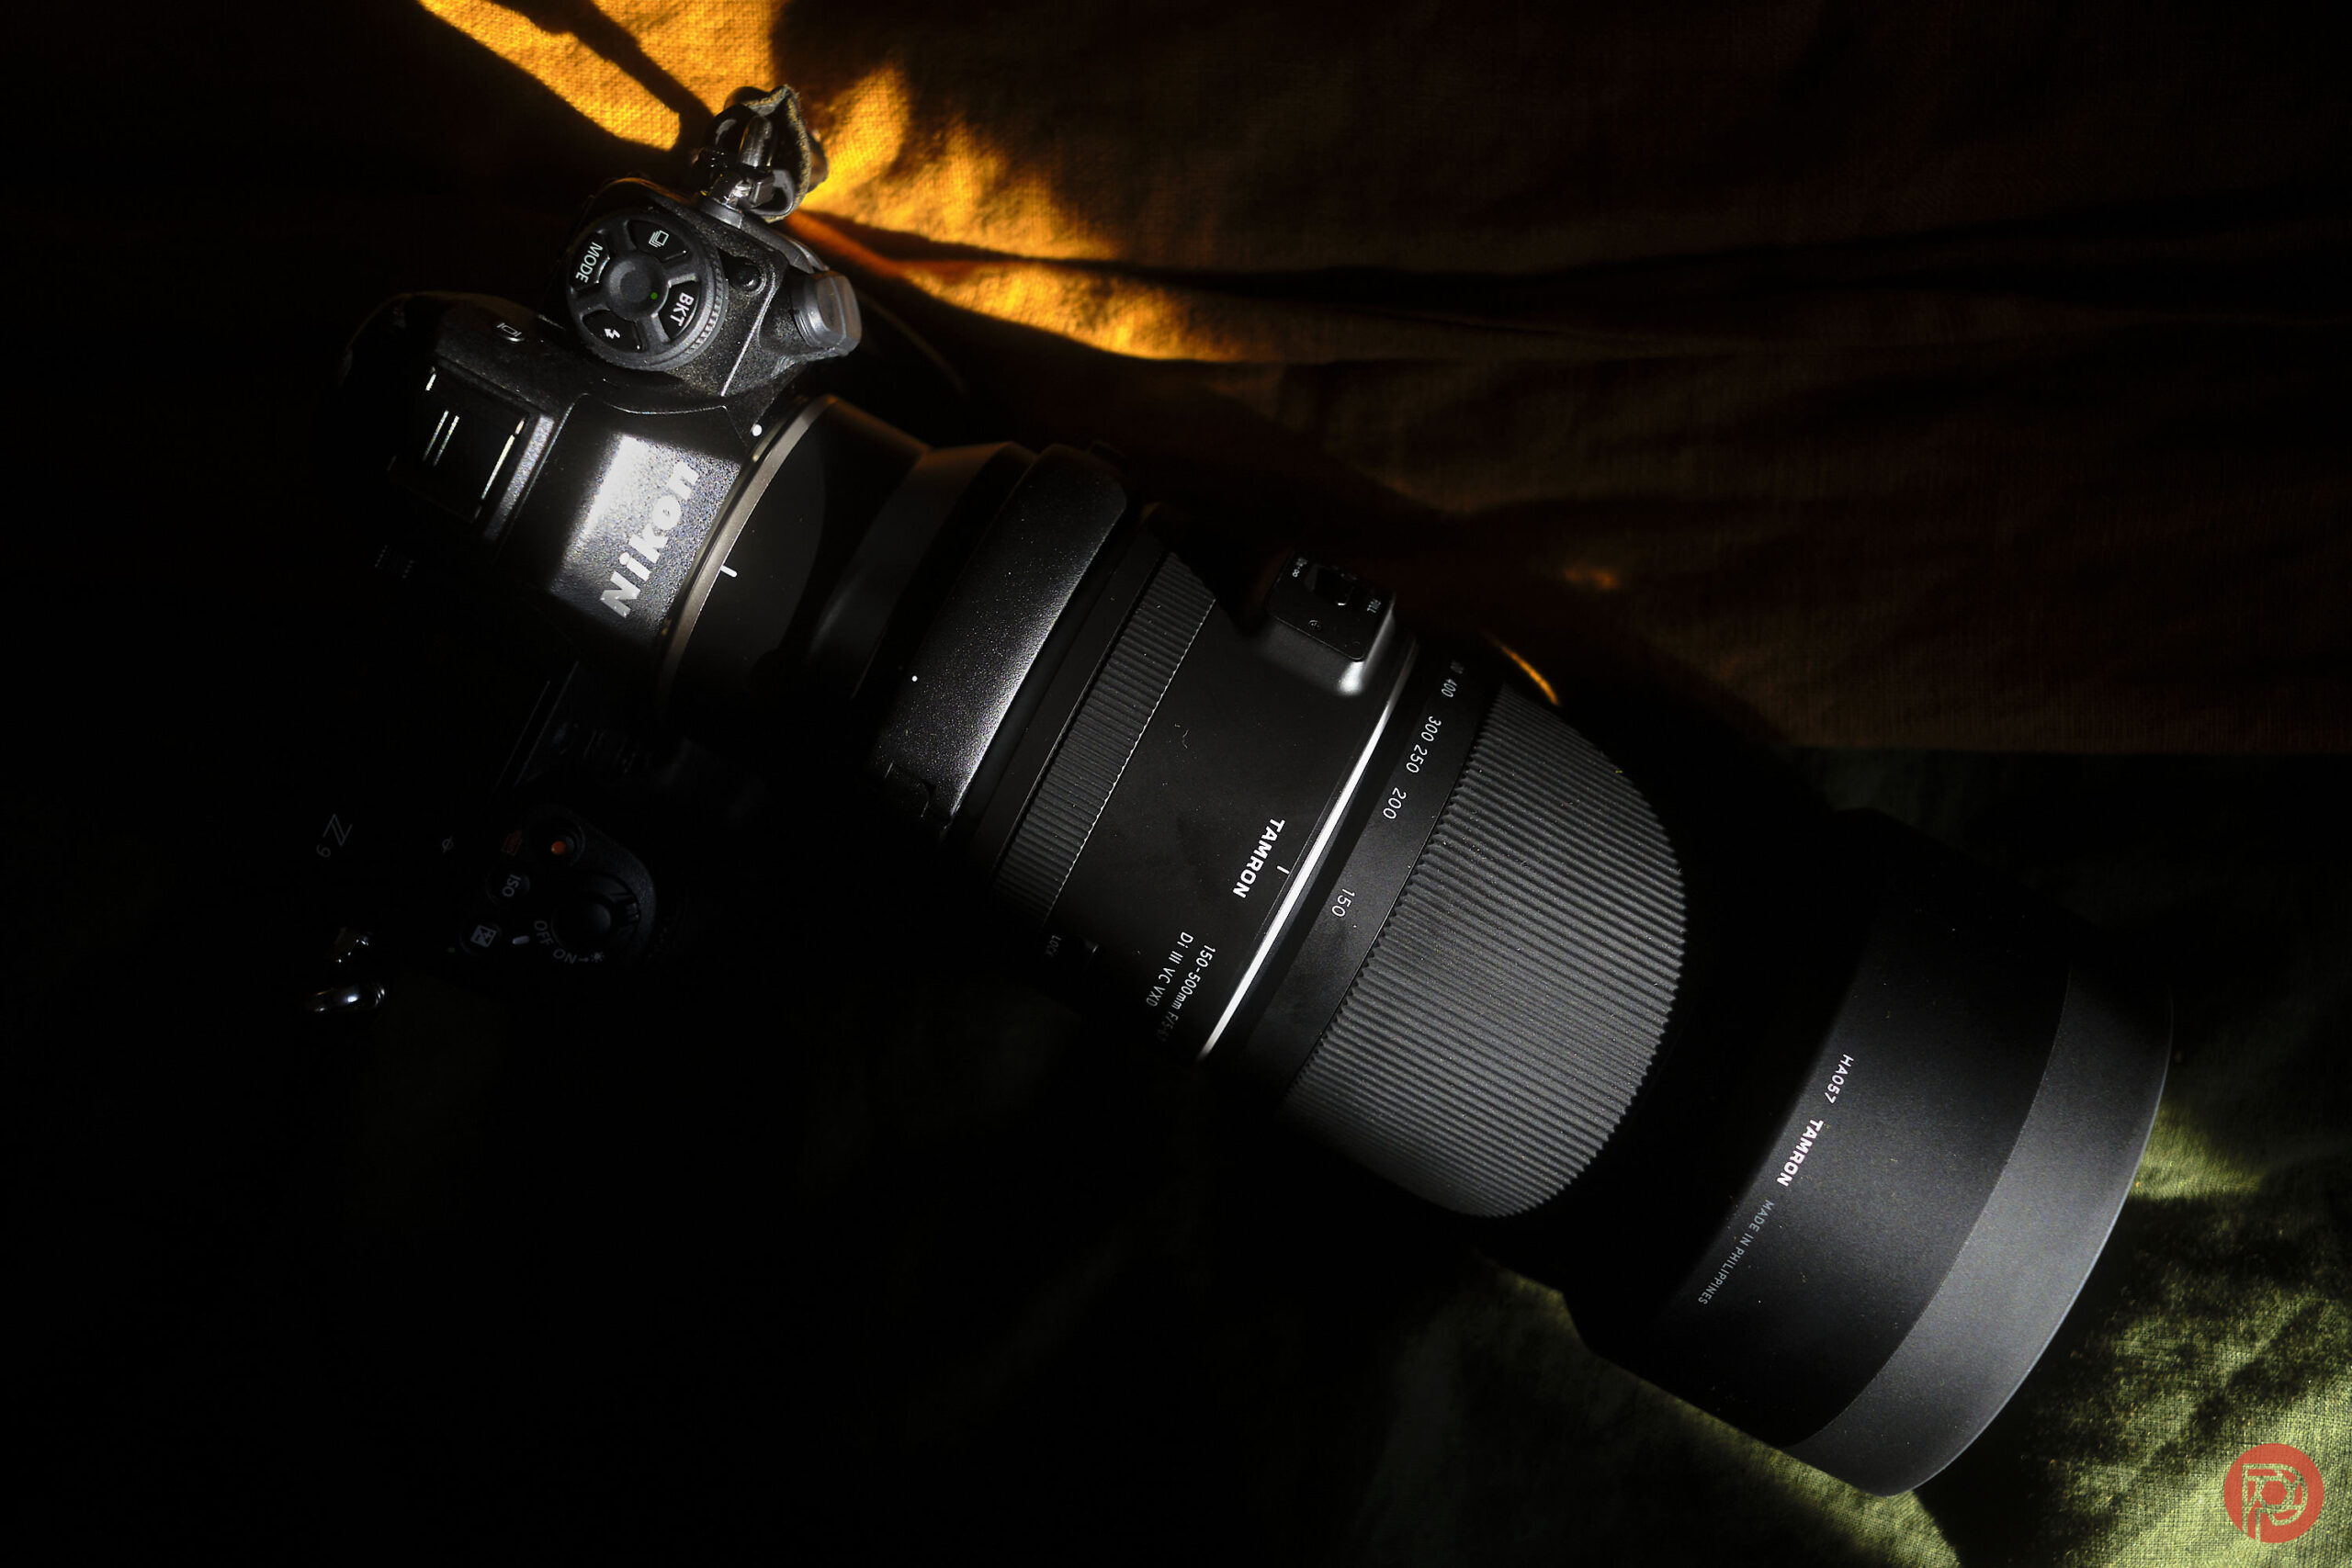 Chris-Gampat-The-Phoblographer-Tamron-150-500mm-on-Nikon-product-image-2.81-210s800